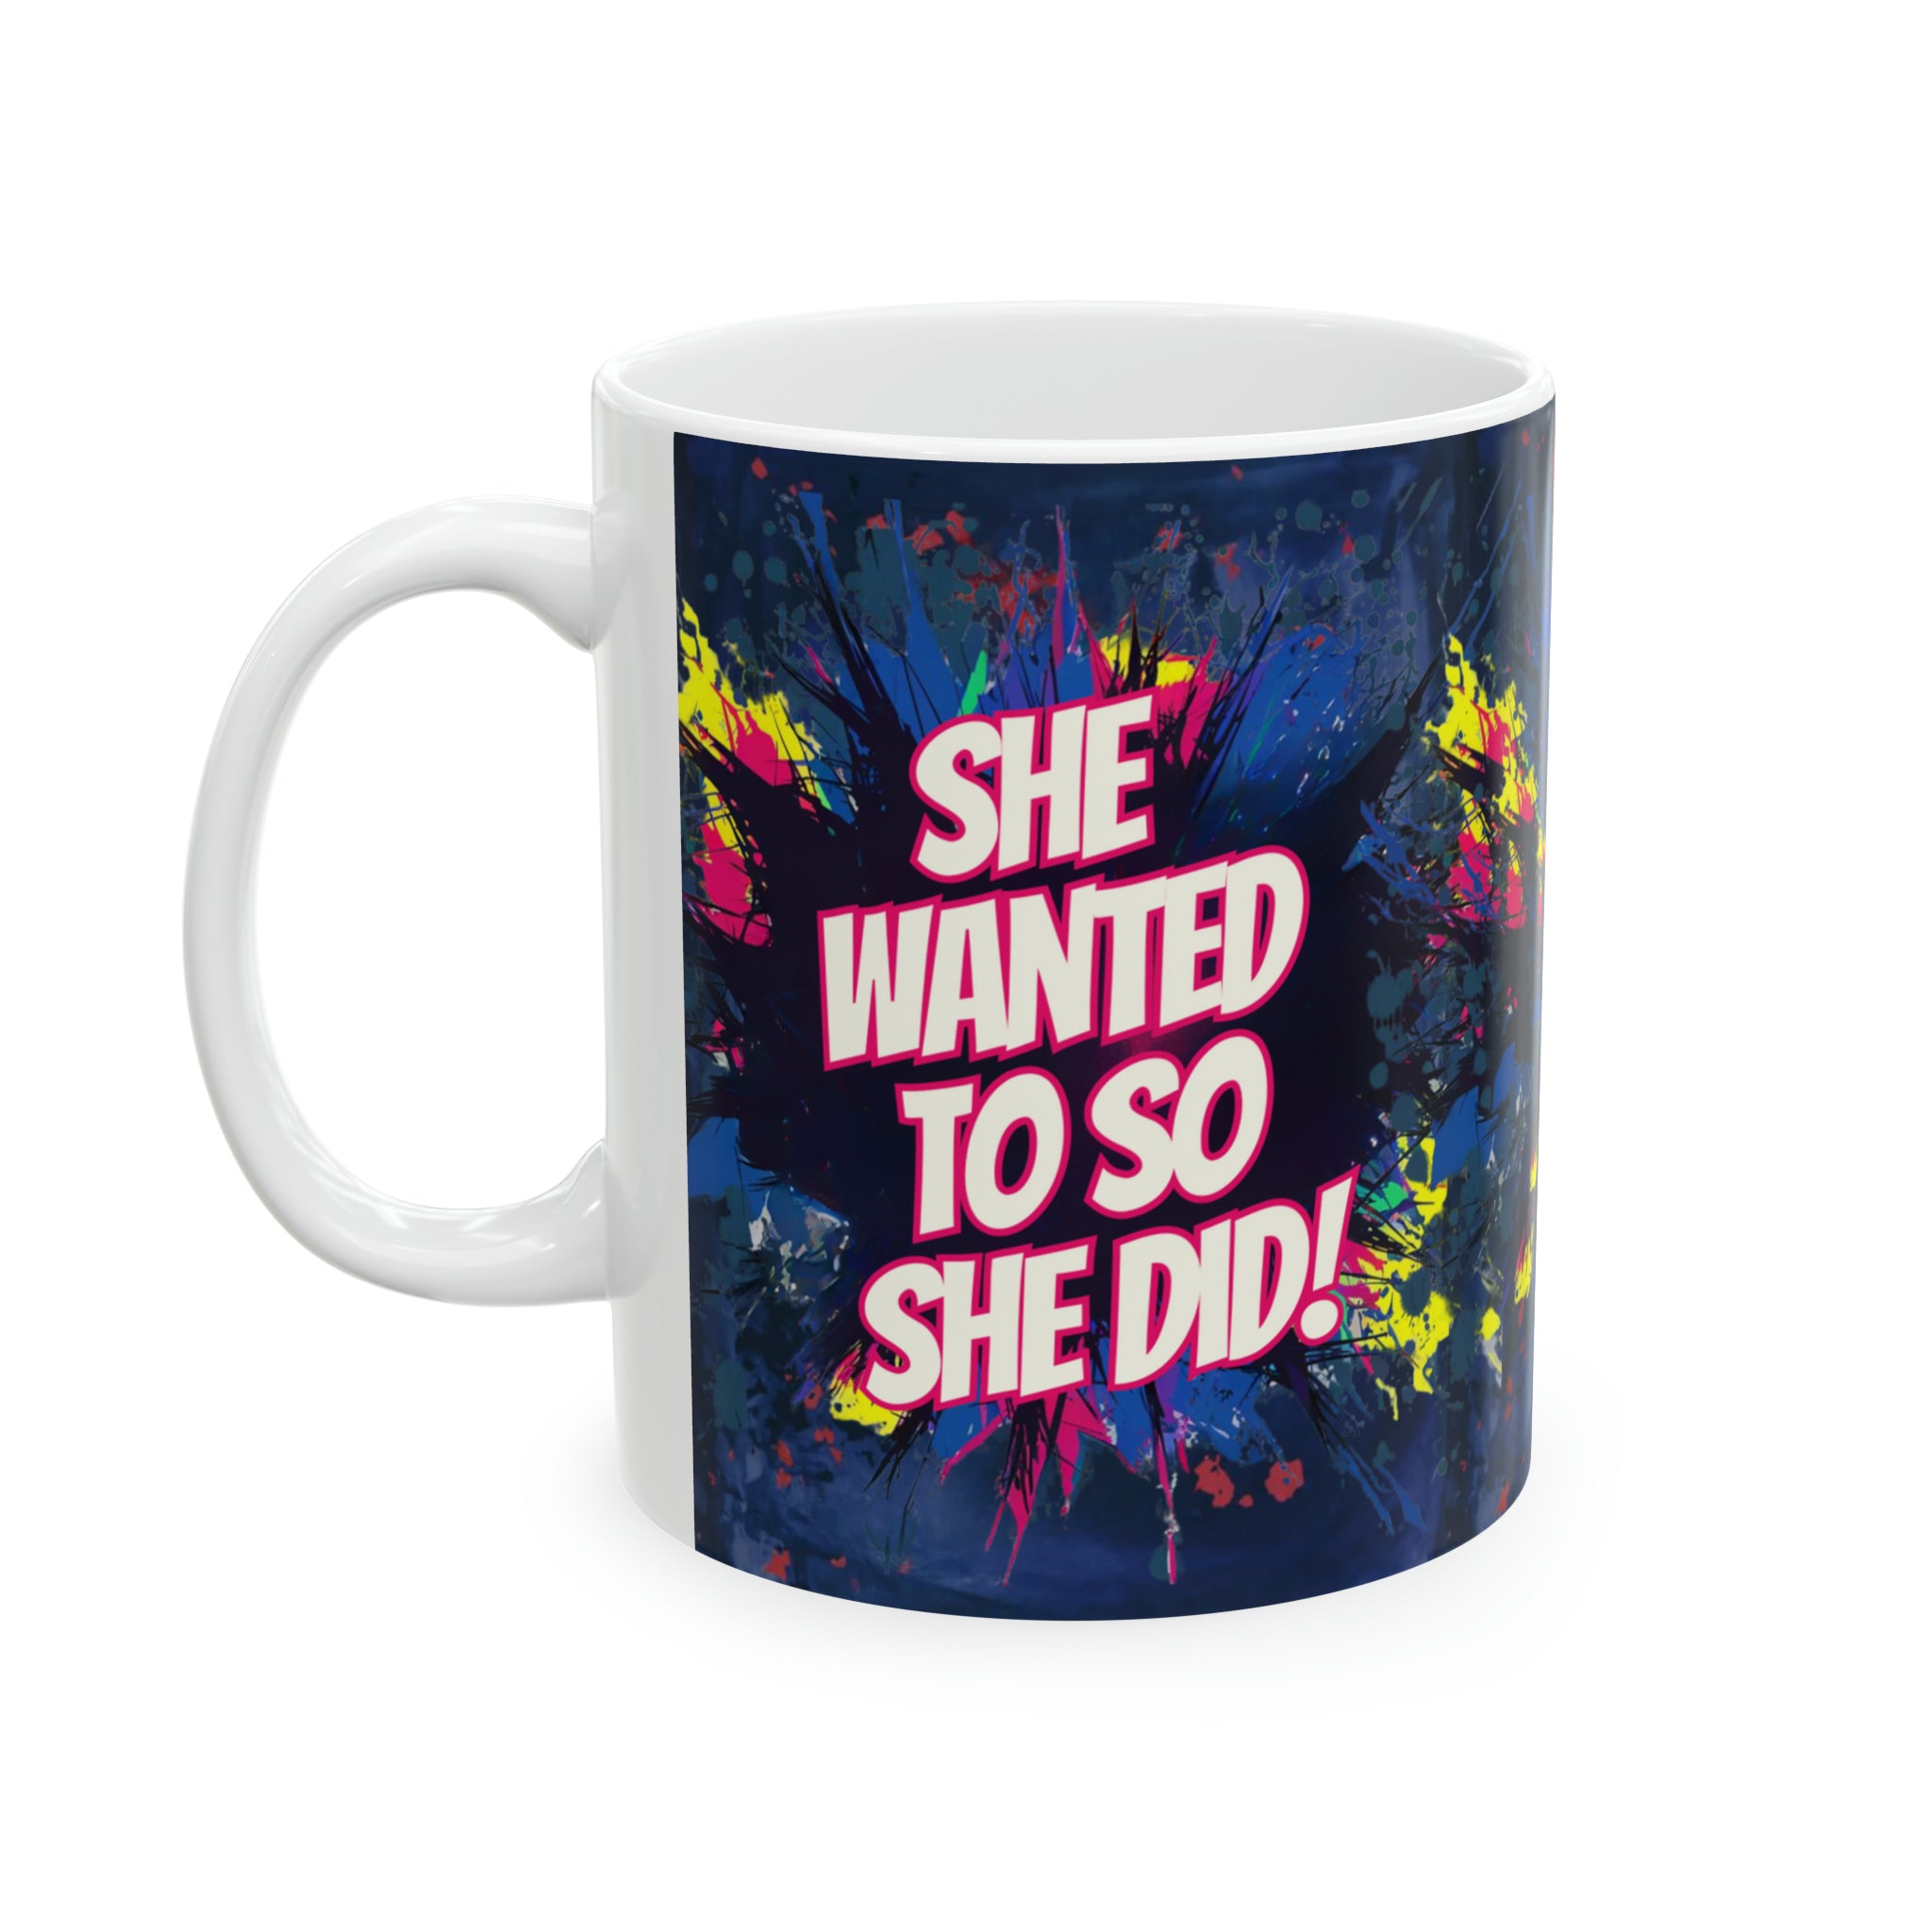 She wanted to So she Did! - Ceramic Mug, 11oz